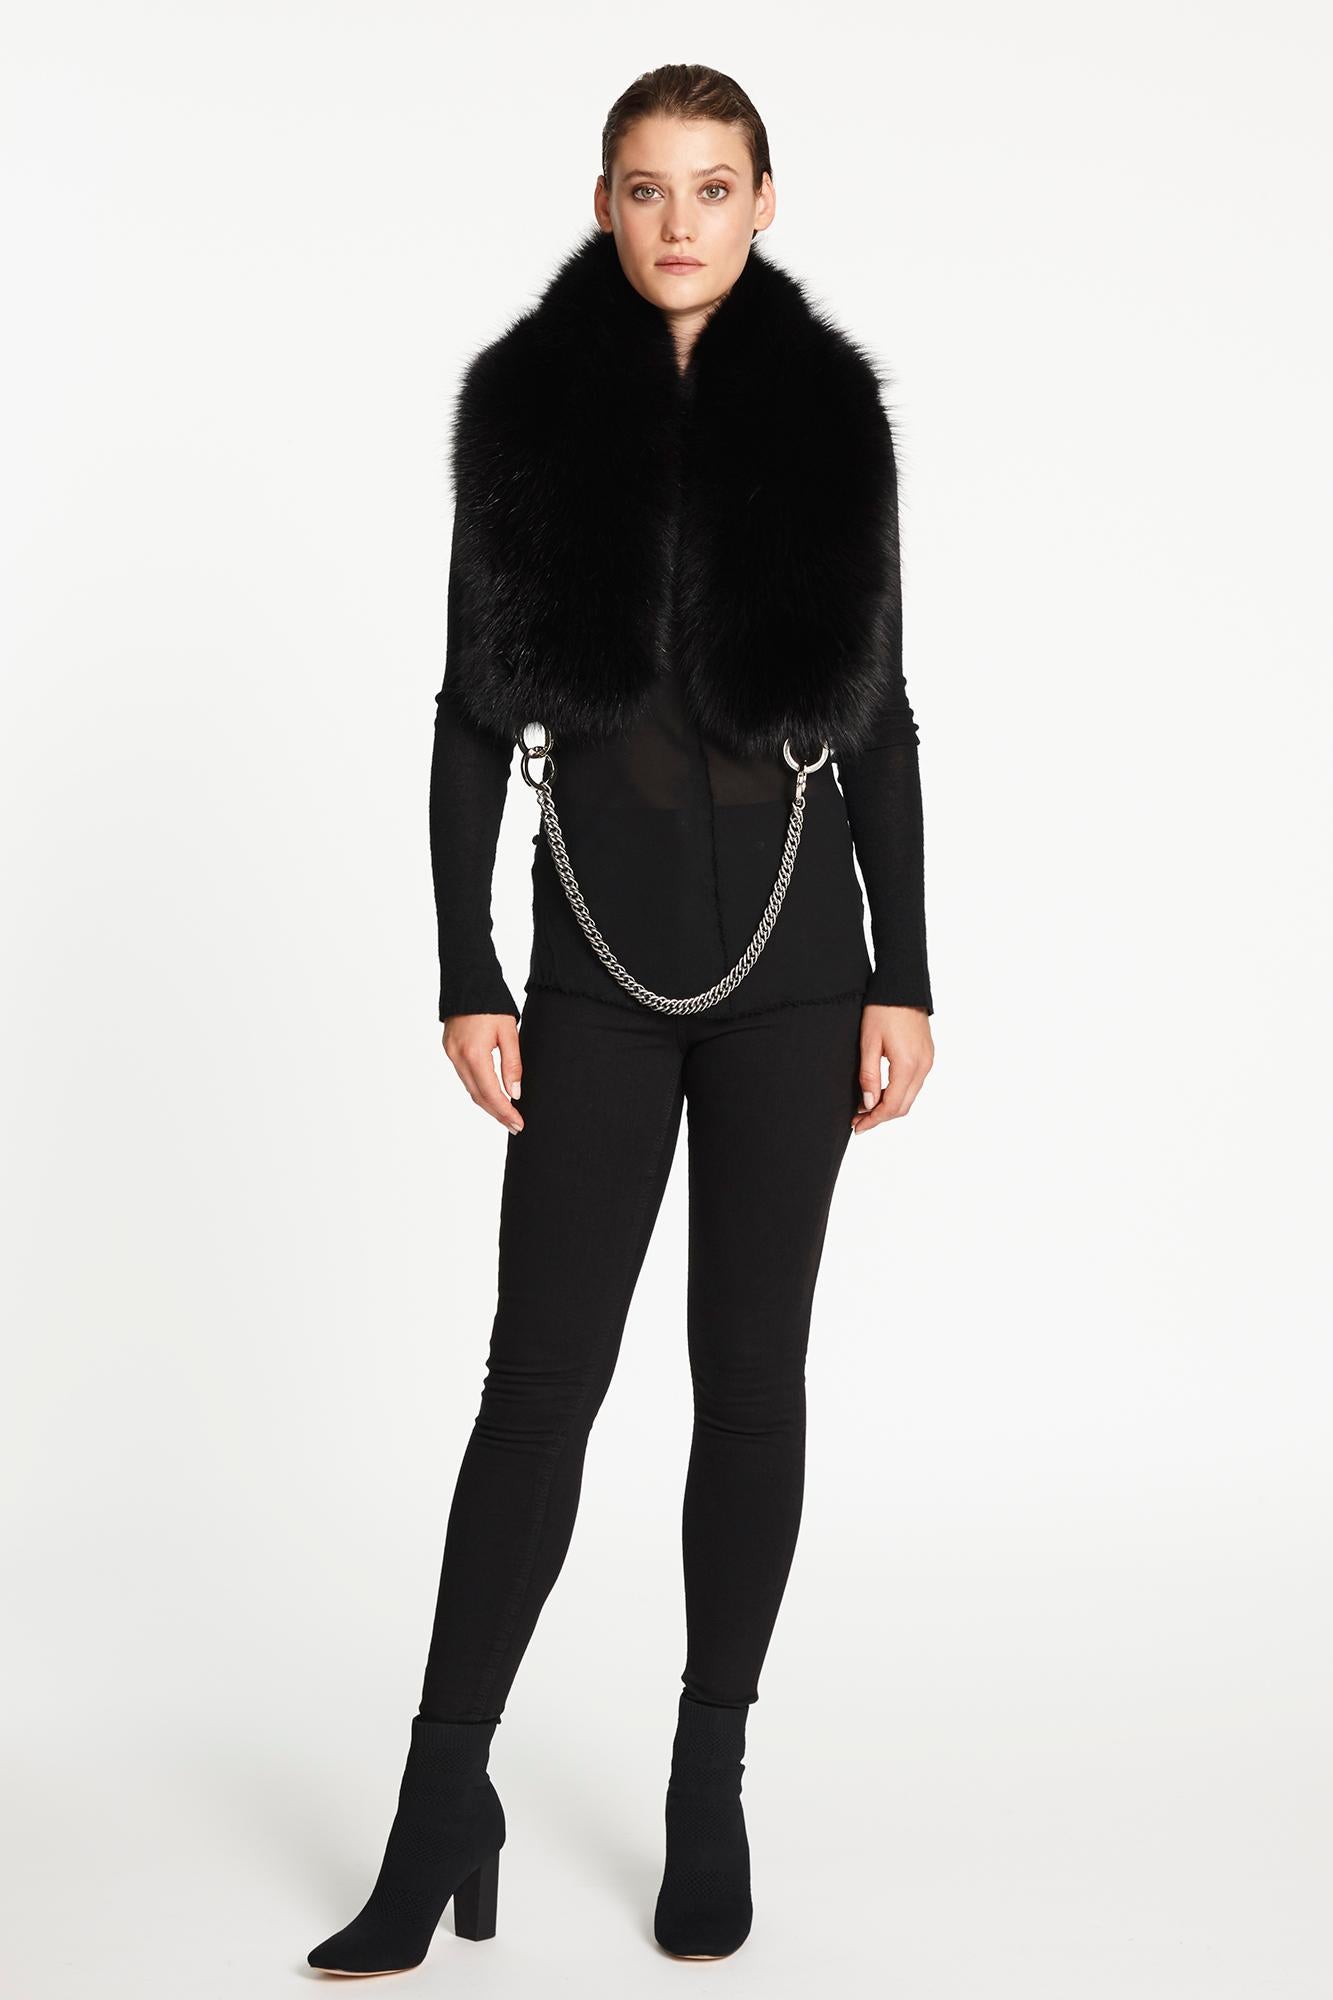 Verheyen London Chained Stole in Black Fox Fur & Silk Lining with Chain - New 1